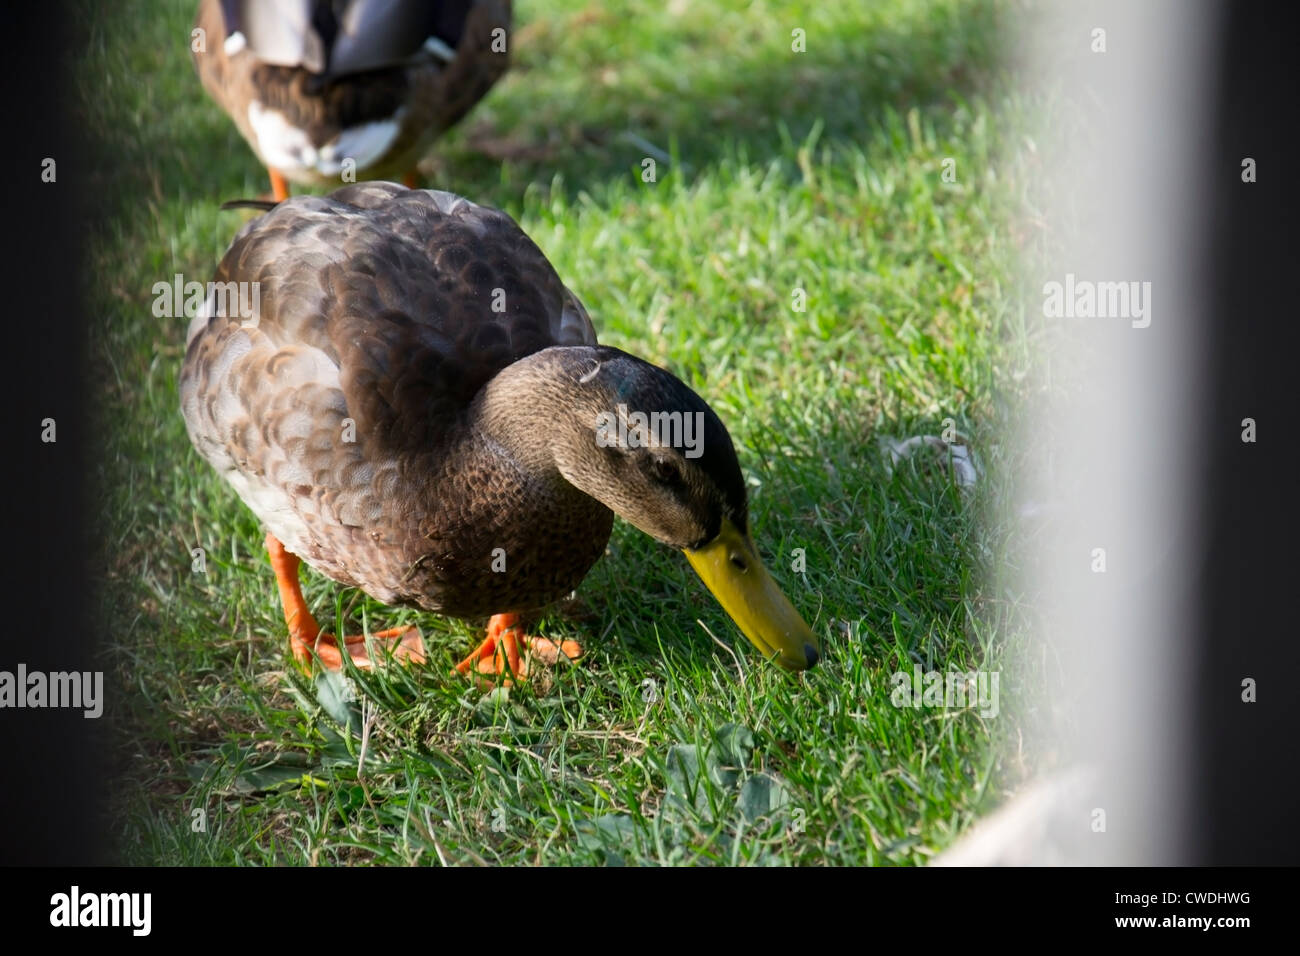 Duck in retiro's park in madrid Stock Photo